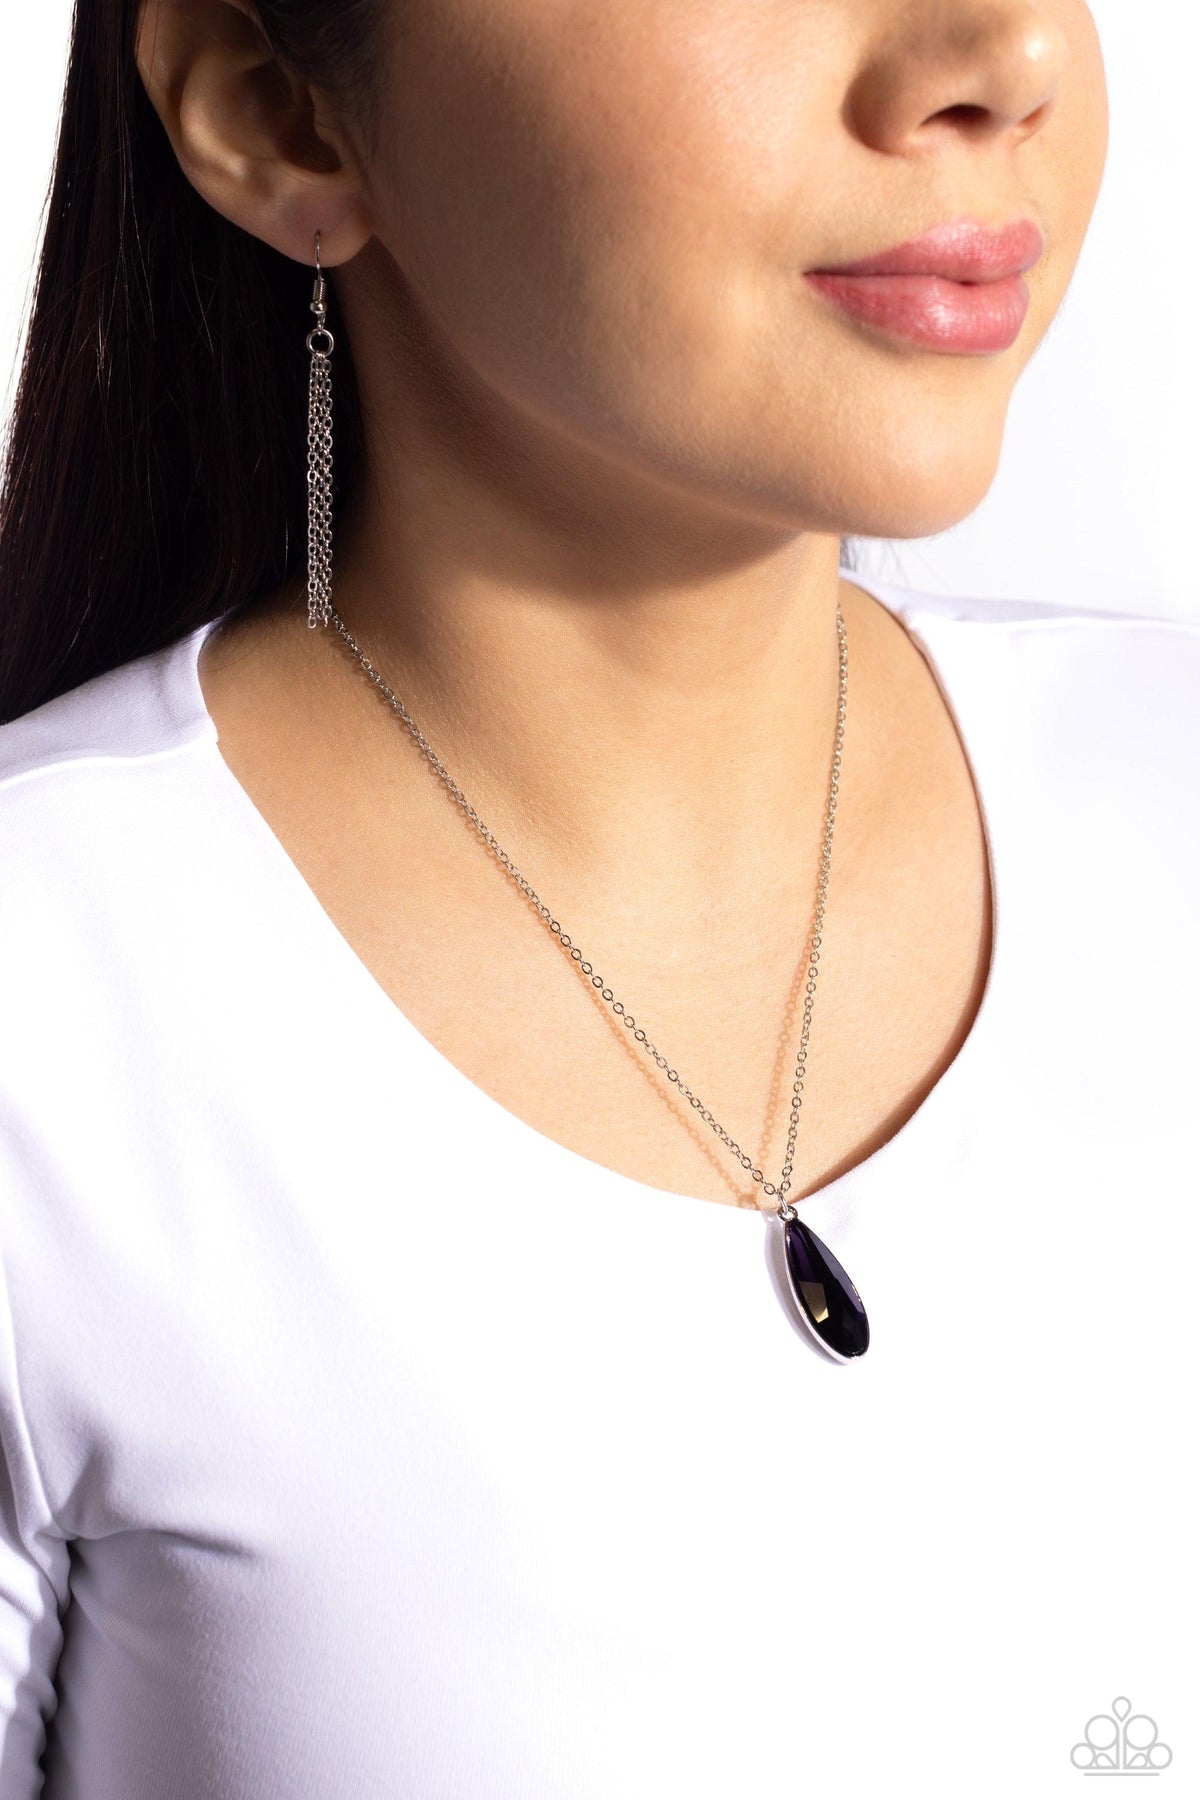 Prismatically Polished Purple Rhinestone Necklace - Paparazzi Accessories-on model - CarasShop.com - $5 Jewelry by Cara Jewels